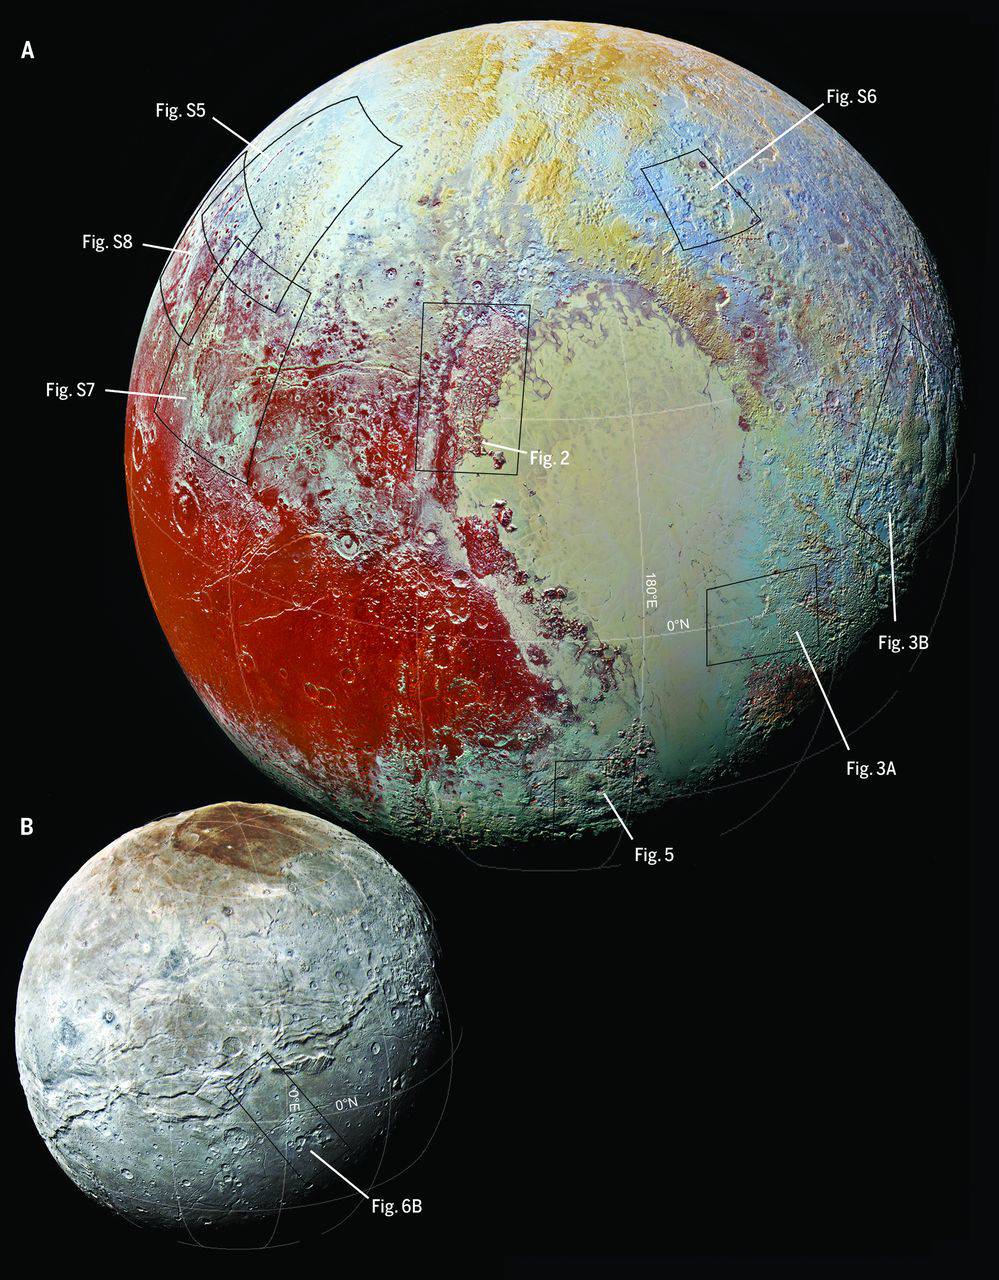 Pluto 2A Special